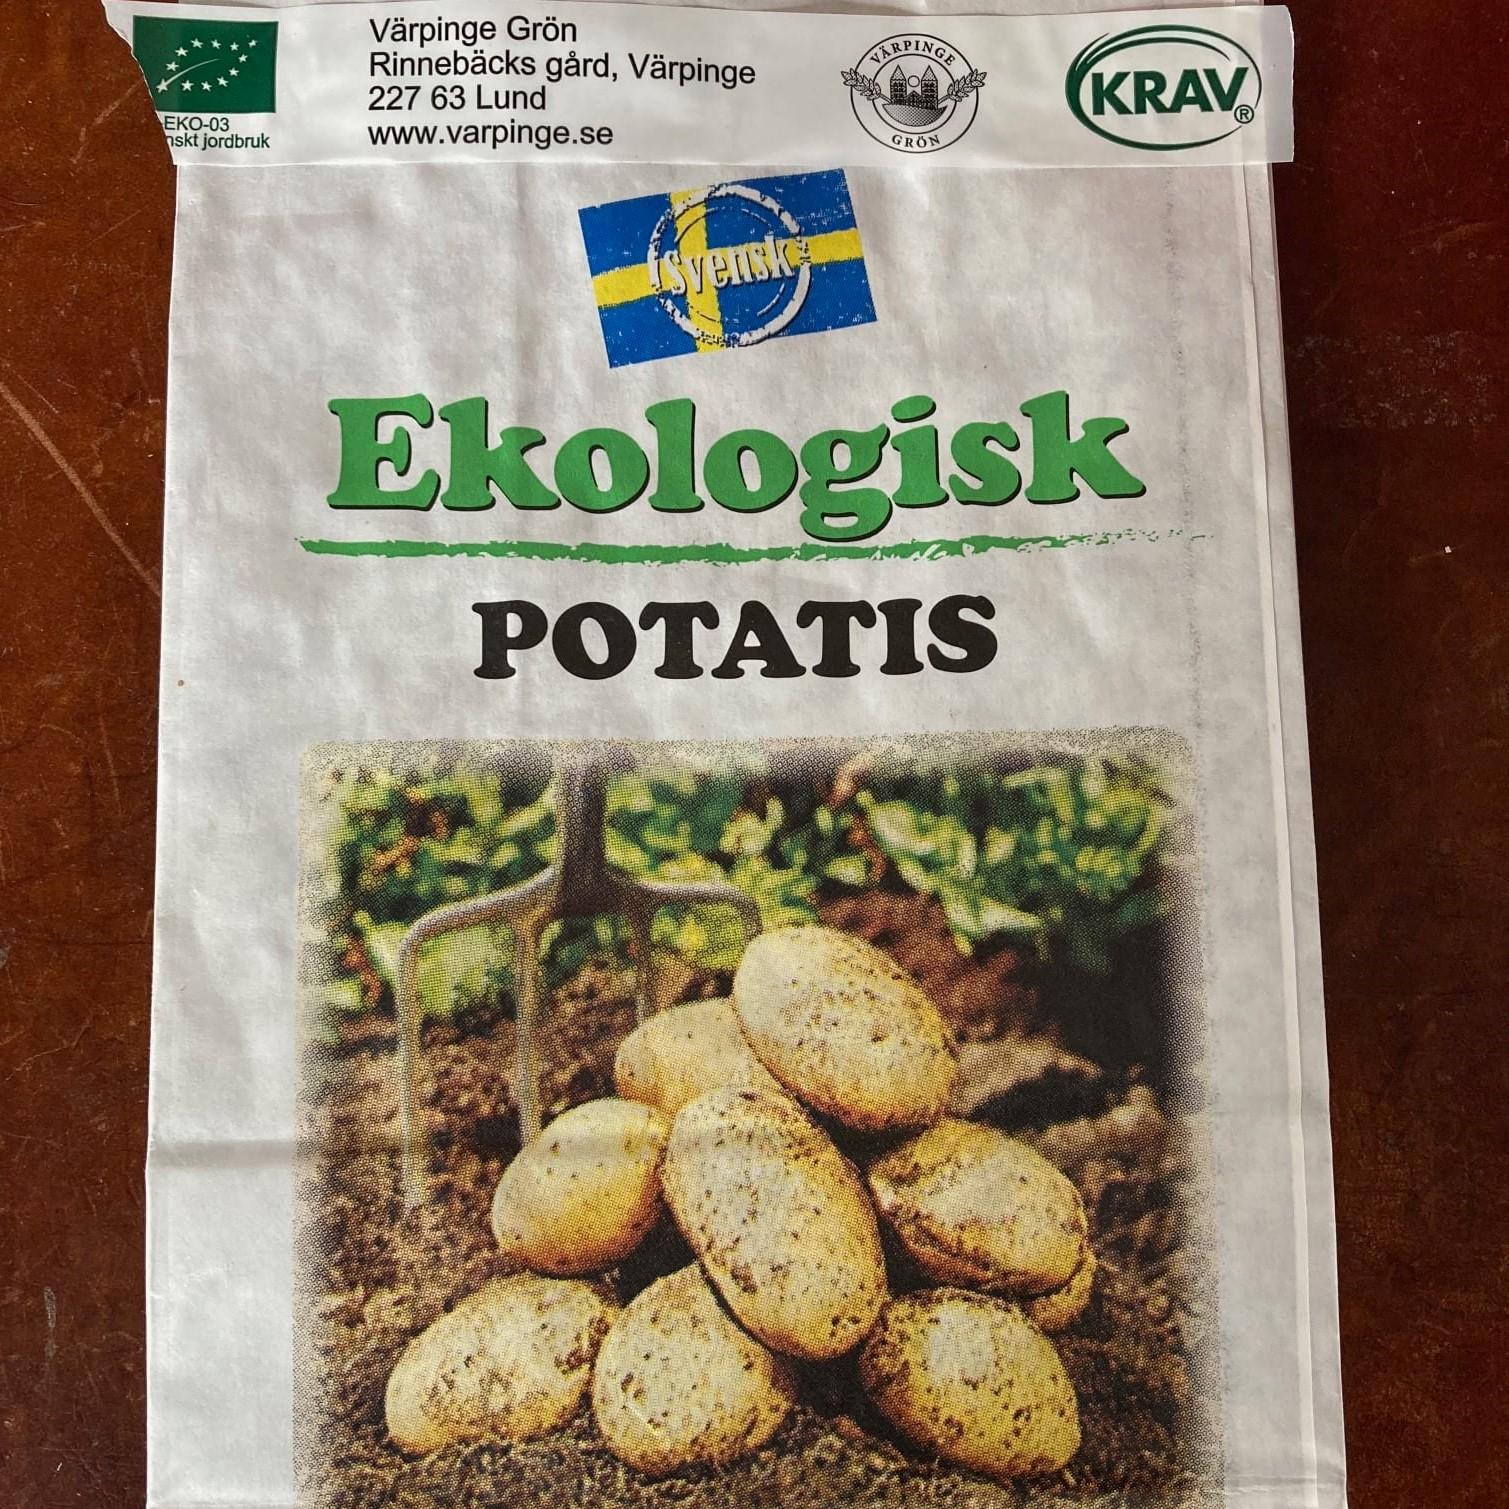 Värpinge Grön's Potatis'